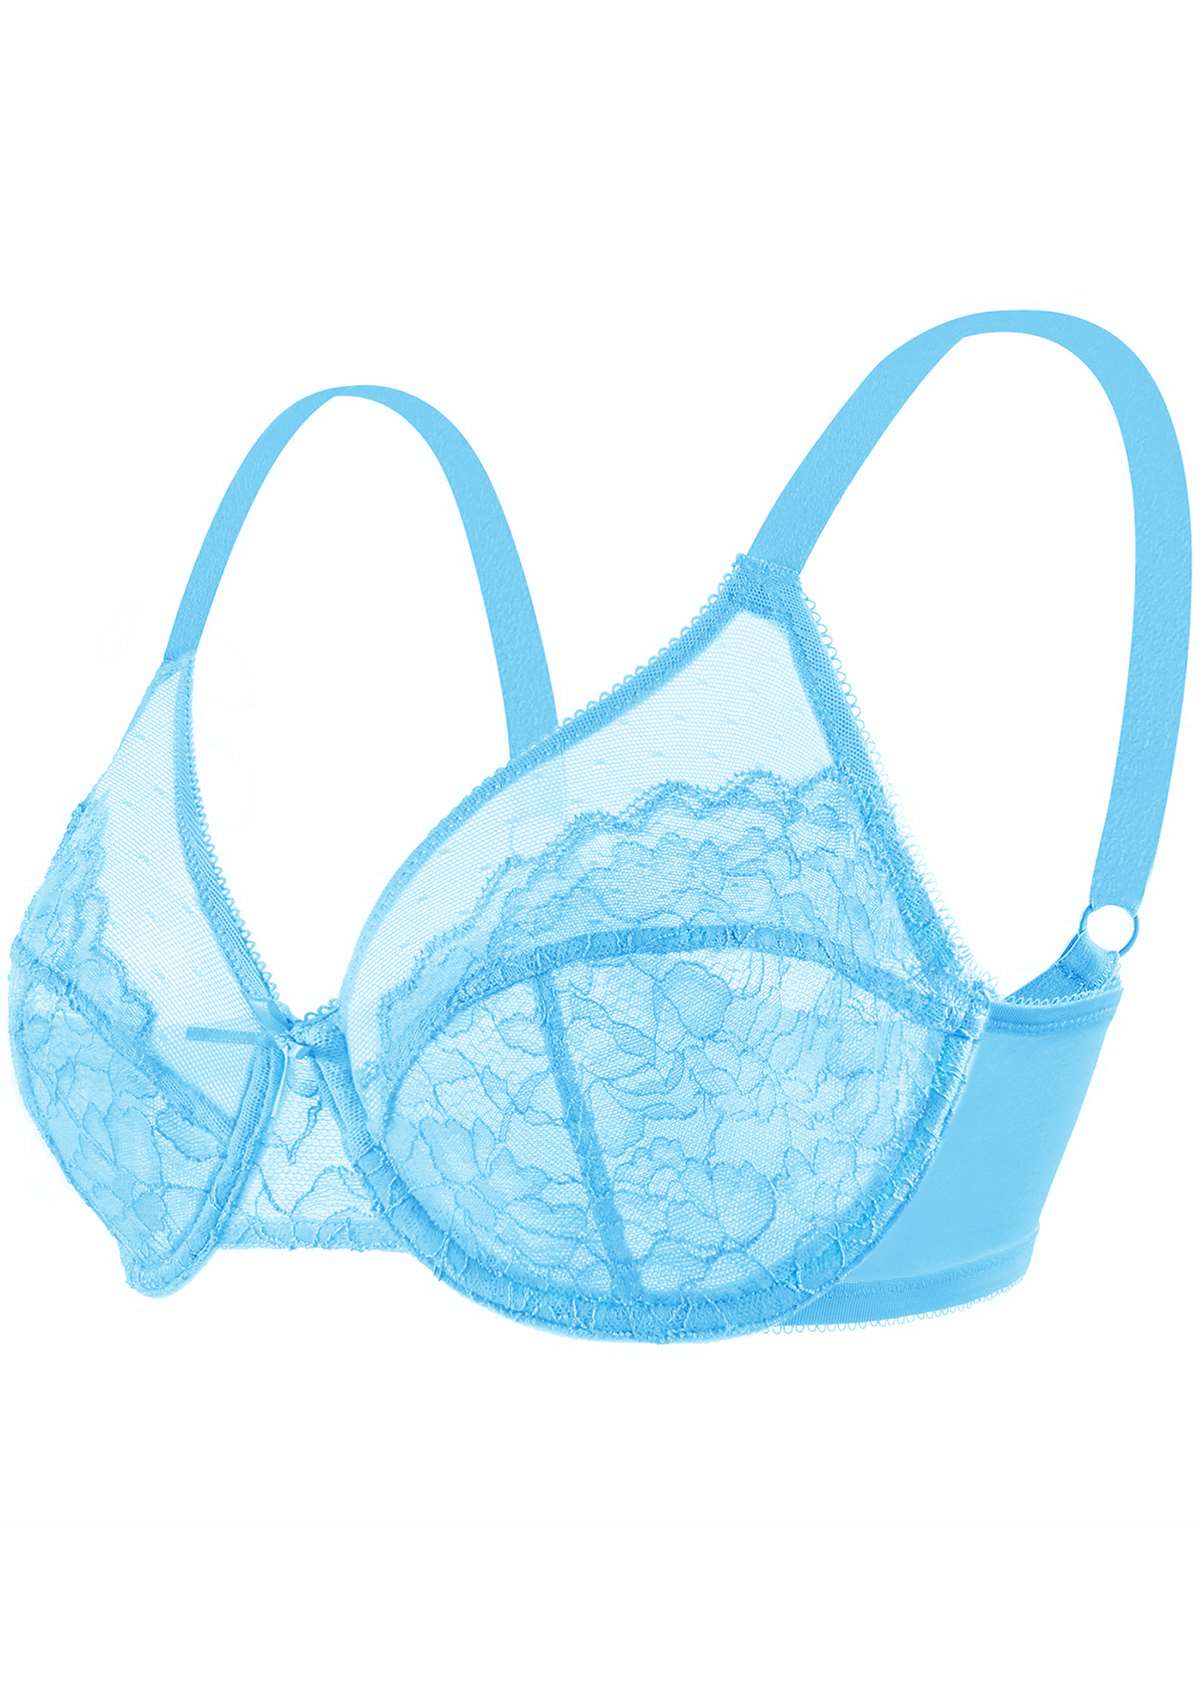 HSIA Enchante Minimizer Lace Bra: Full Support For Heavy Breasts - Capri Blue / 40 / I